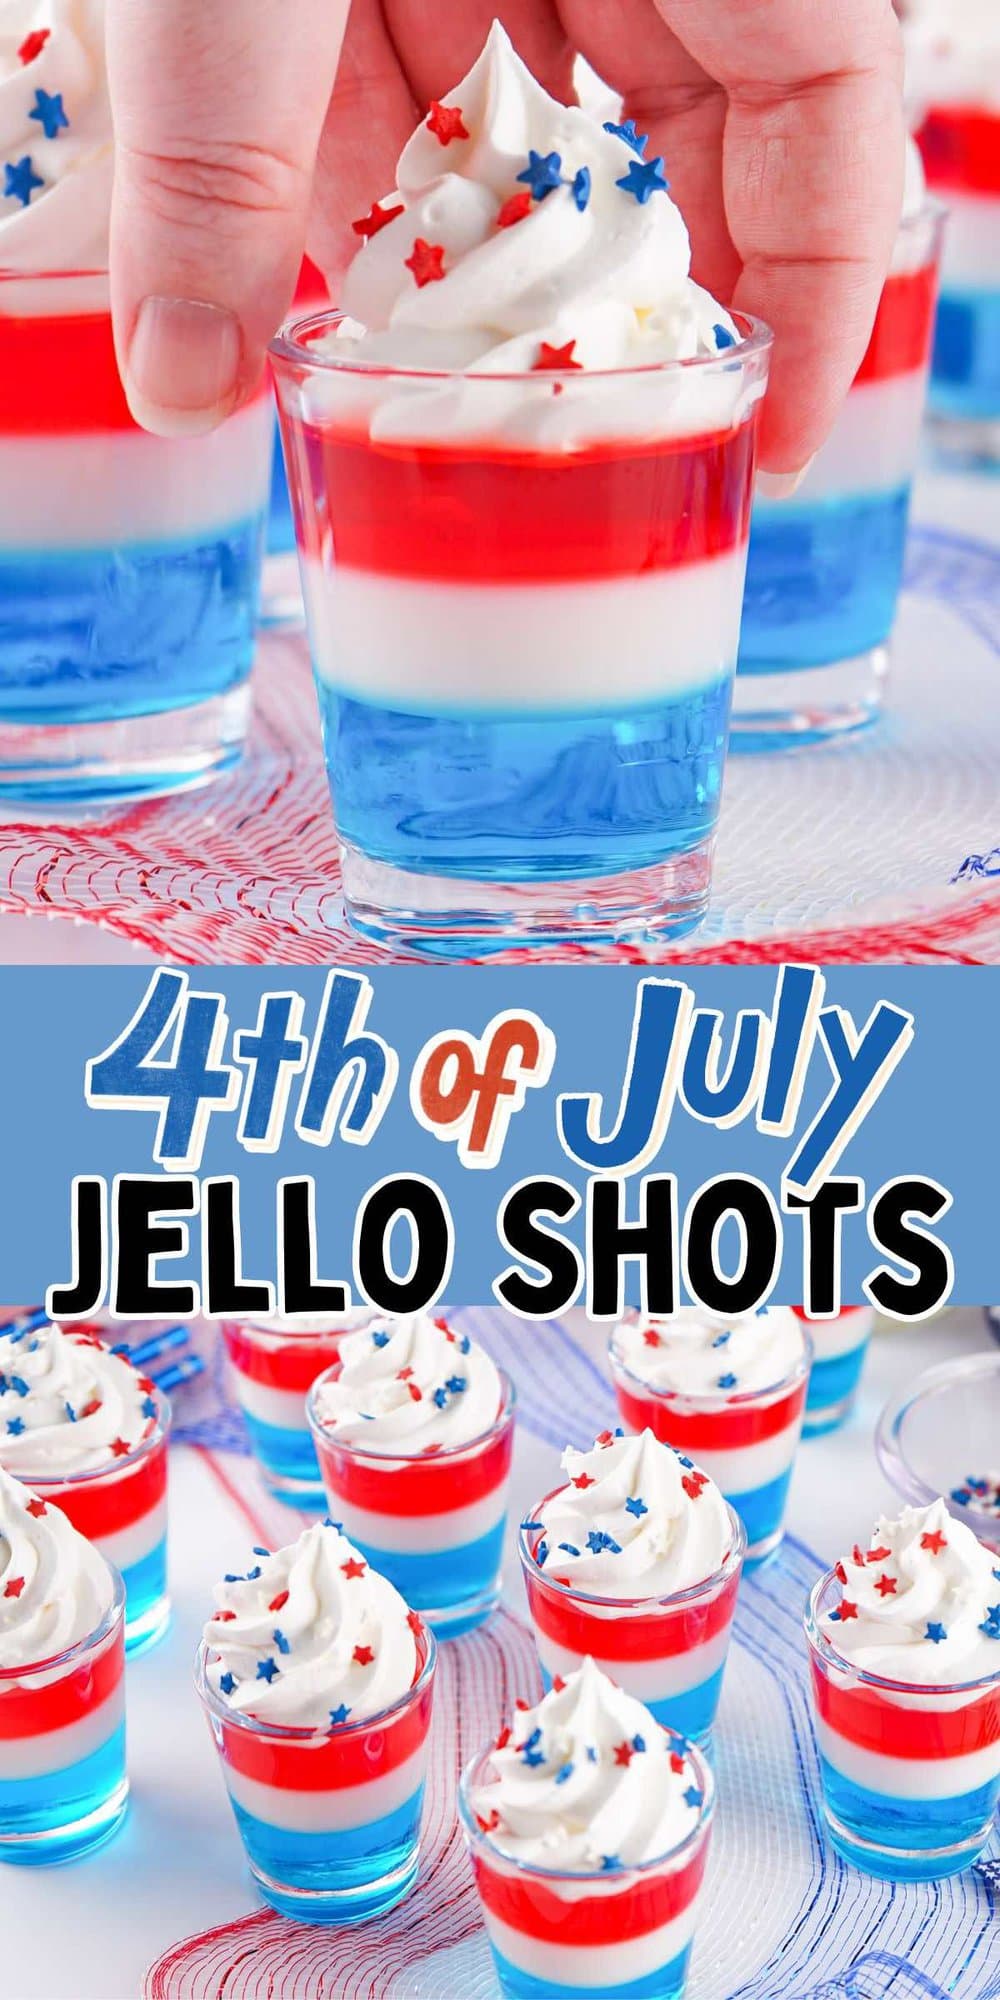 4th of july jello shots pins.